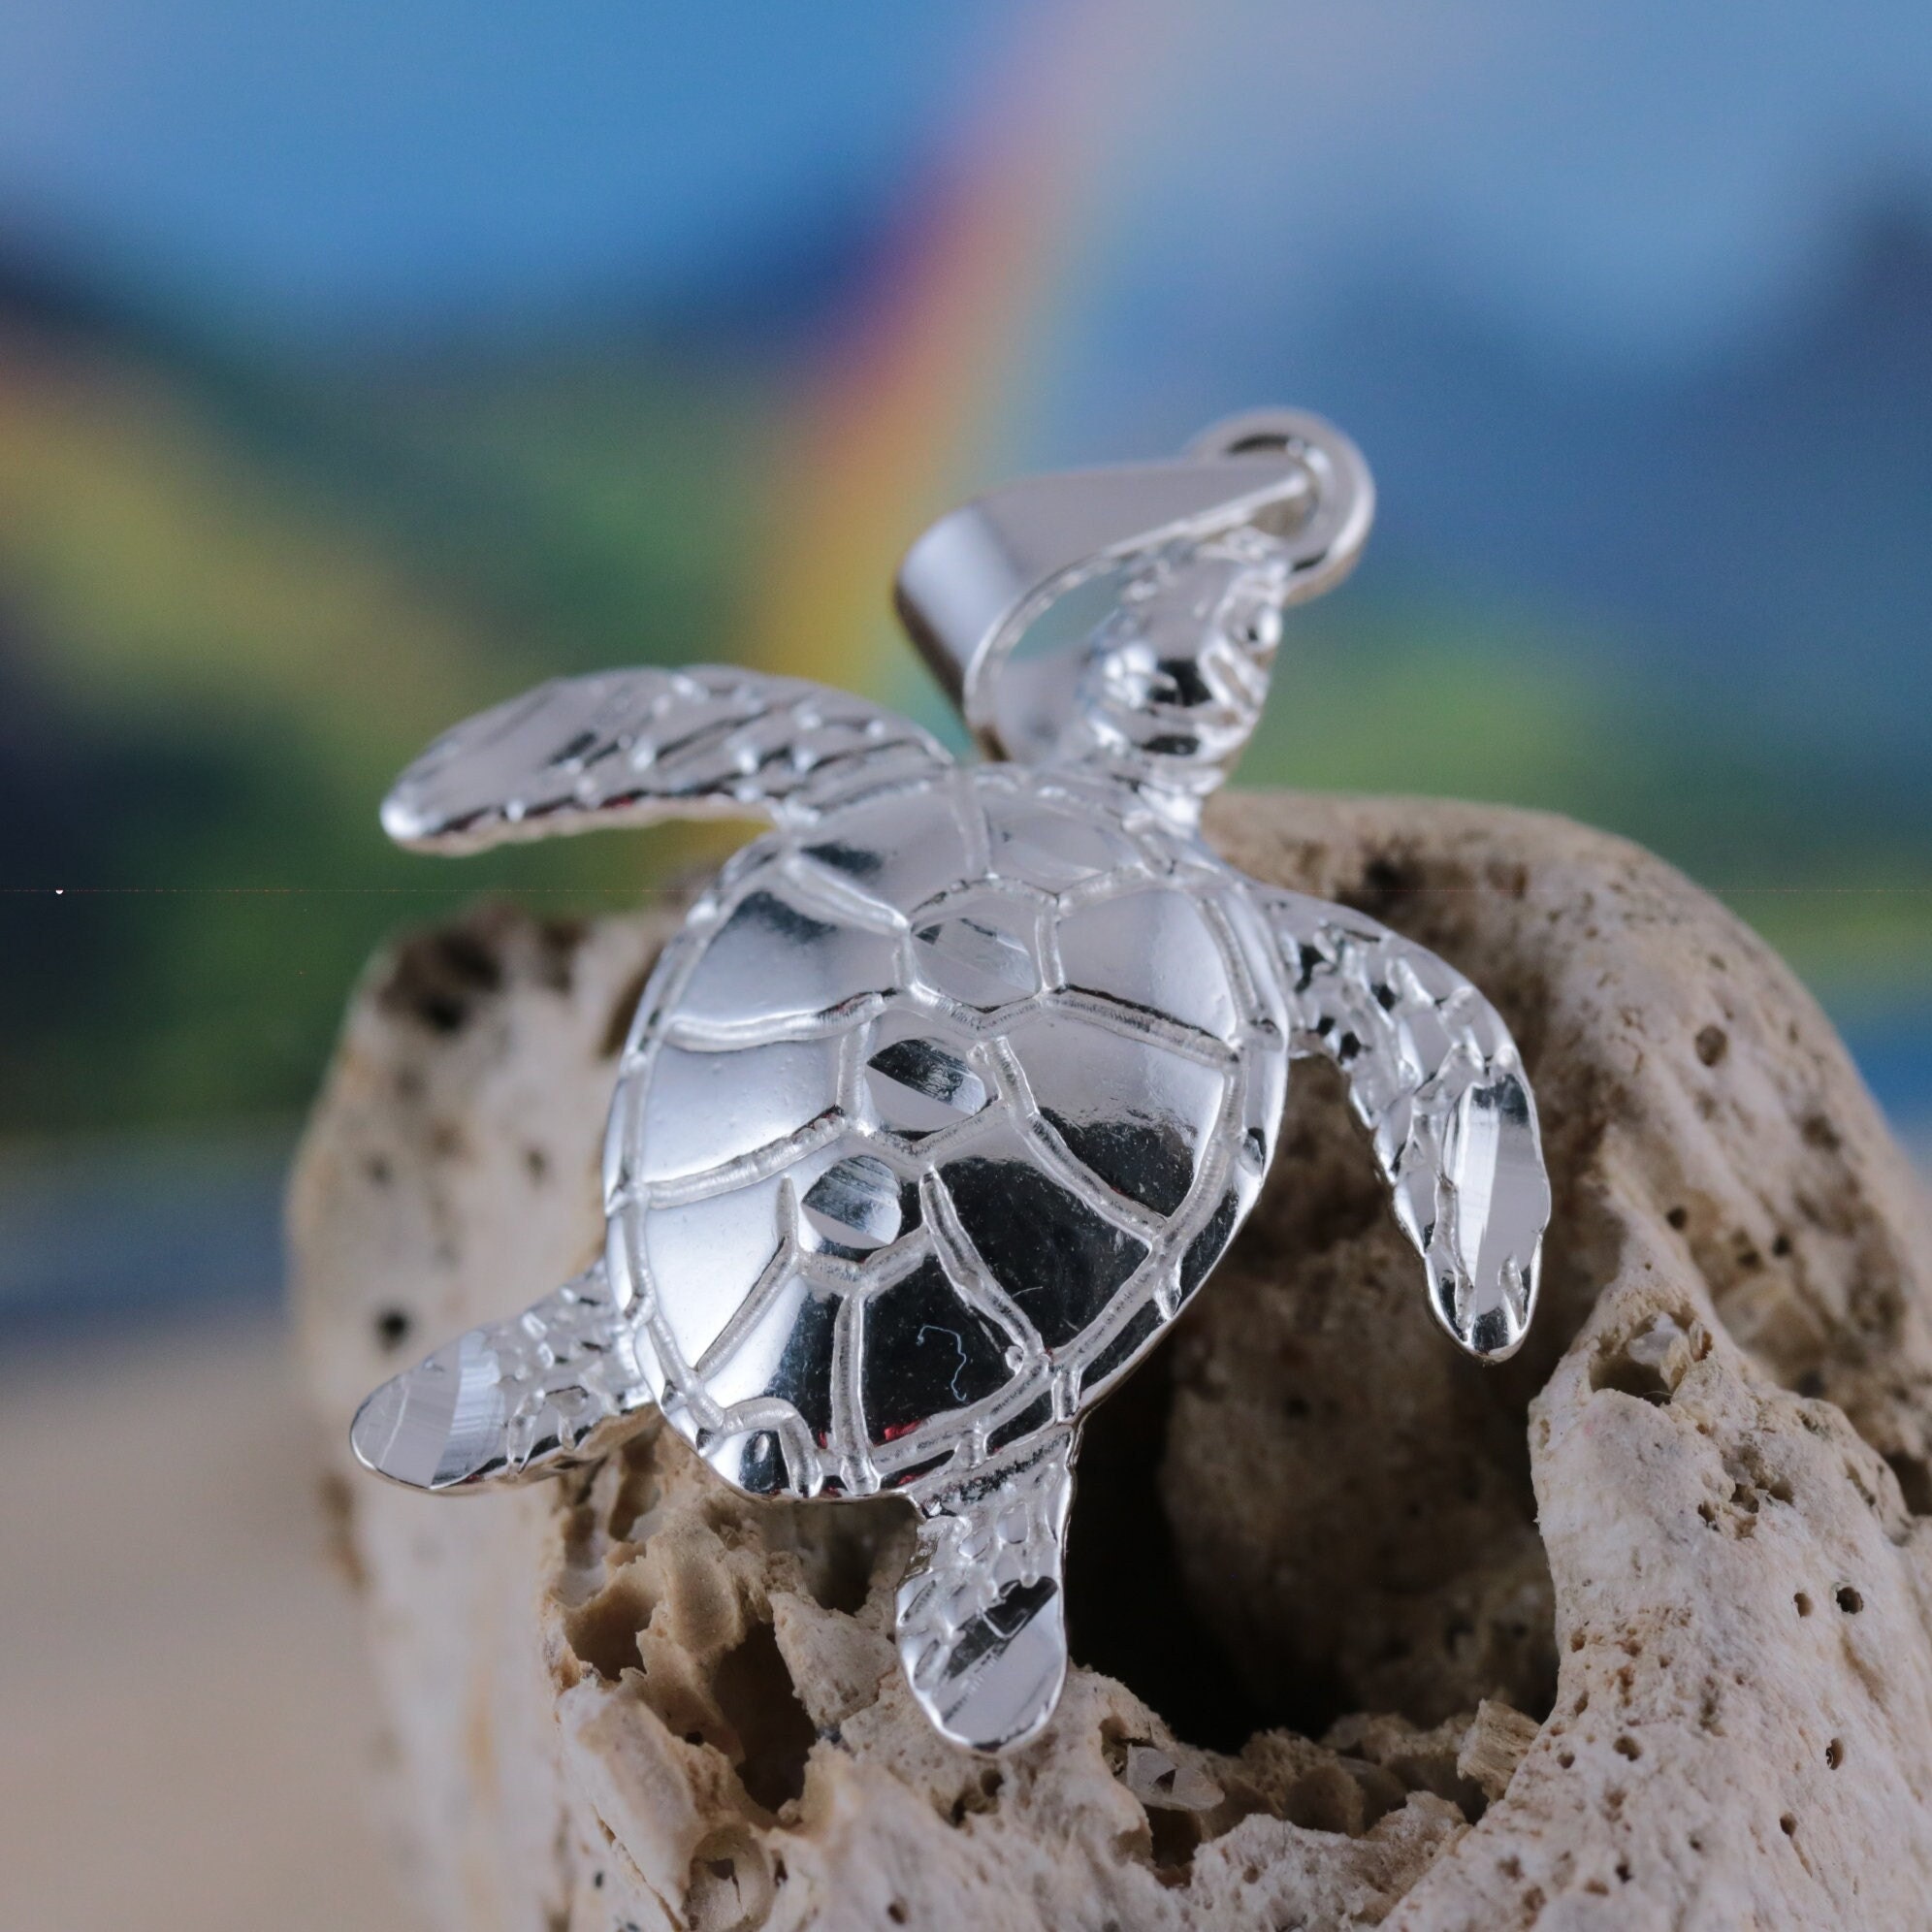 Gliding Sea Turtle - Diamond Painting Kit - YLJ Art Shop